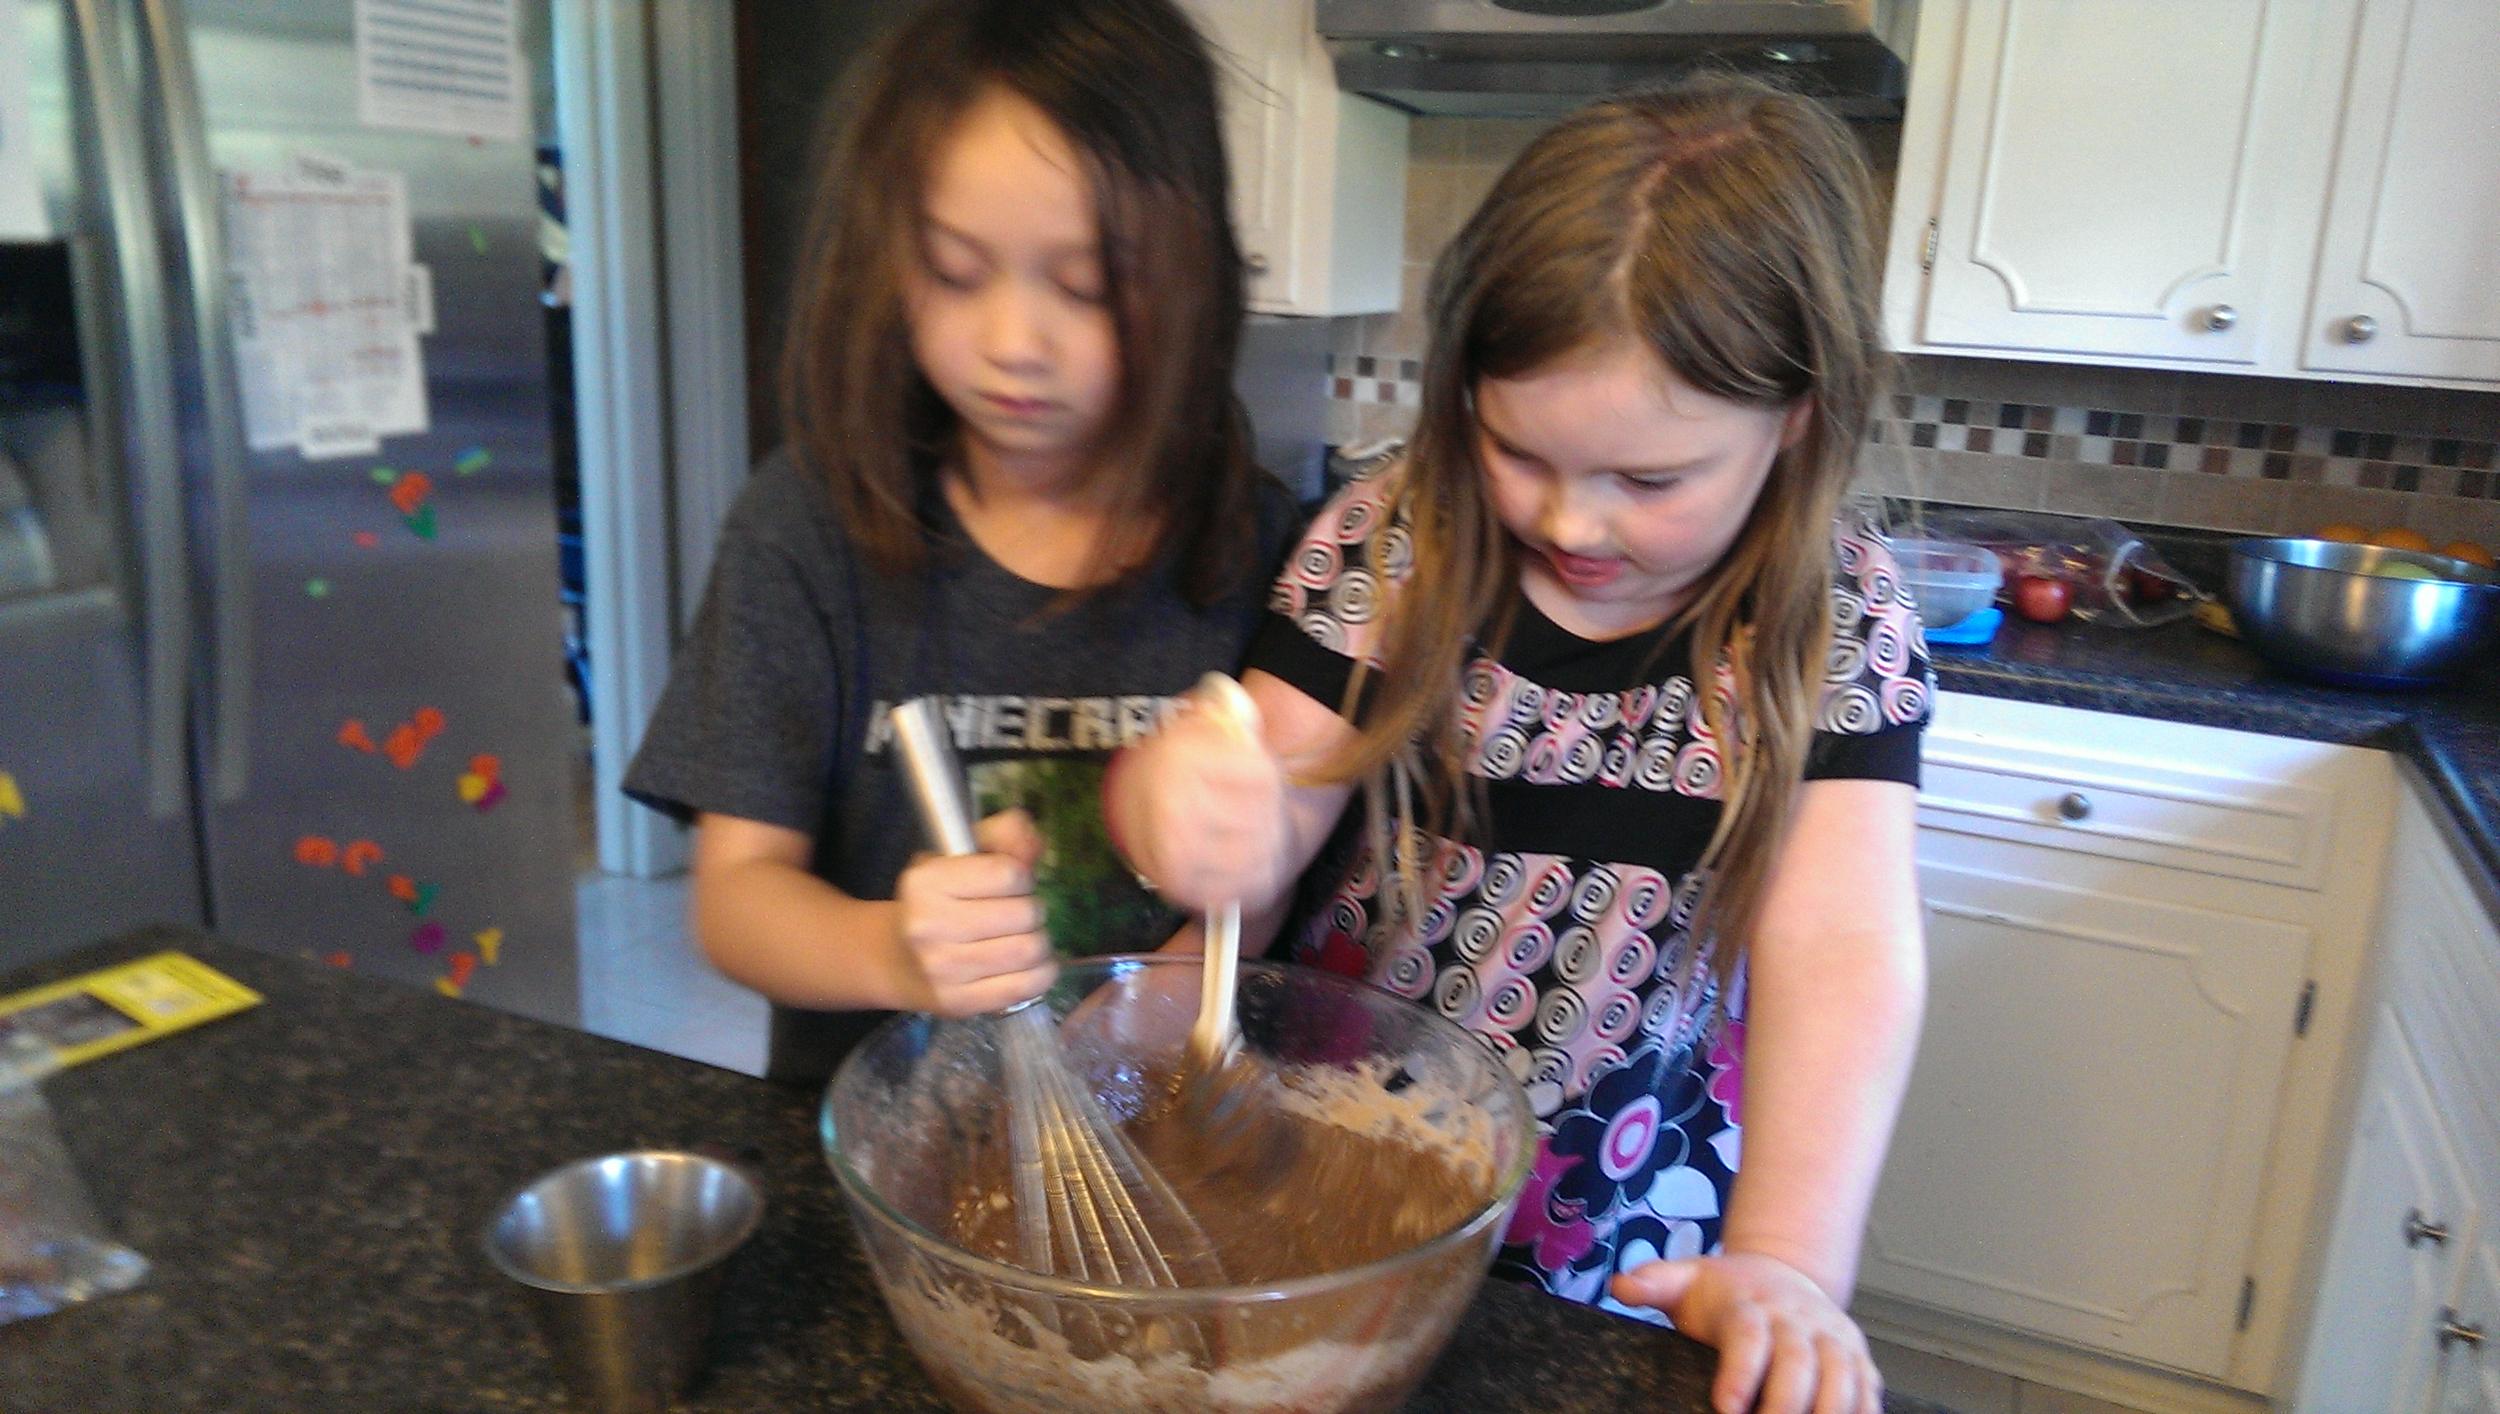 Making the cake.